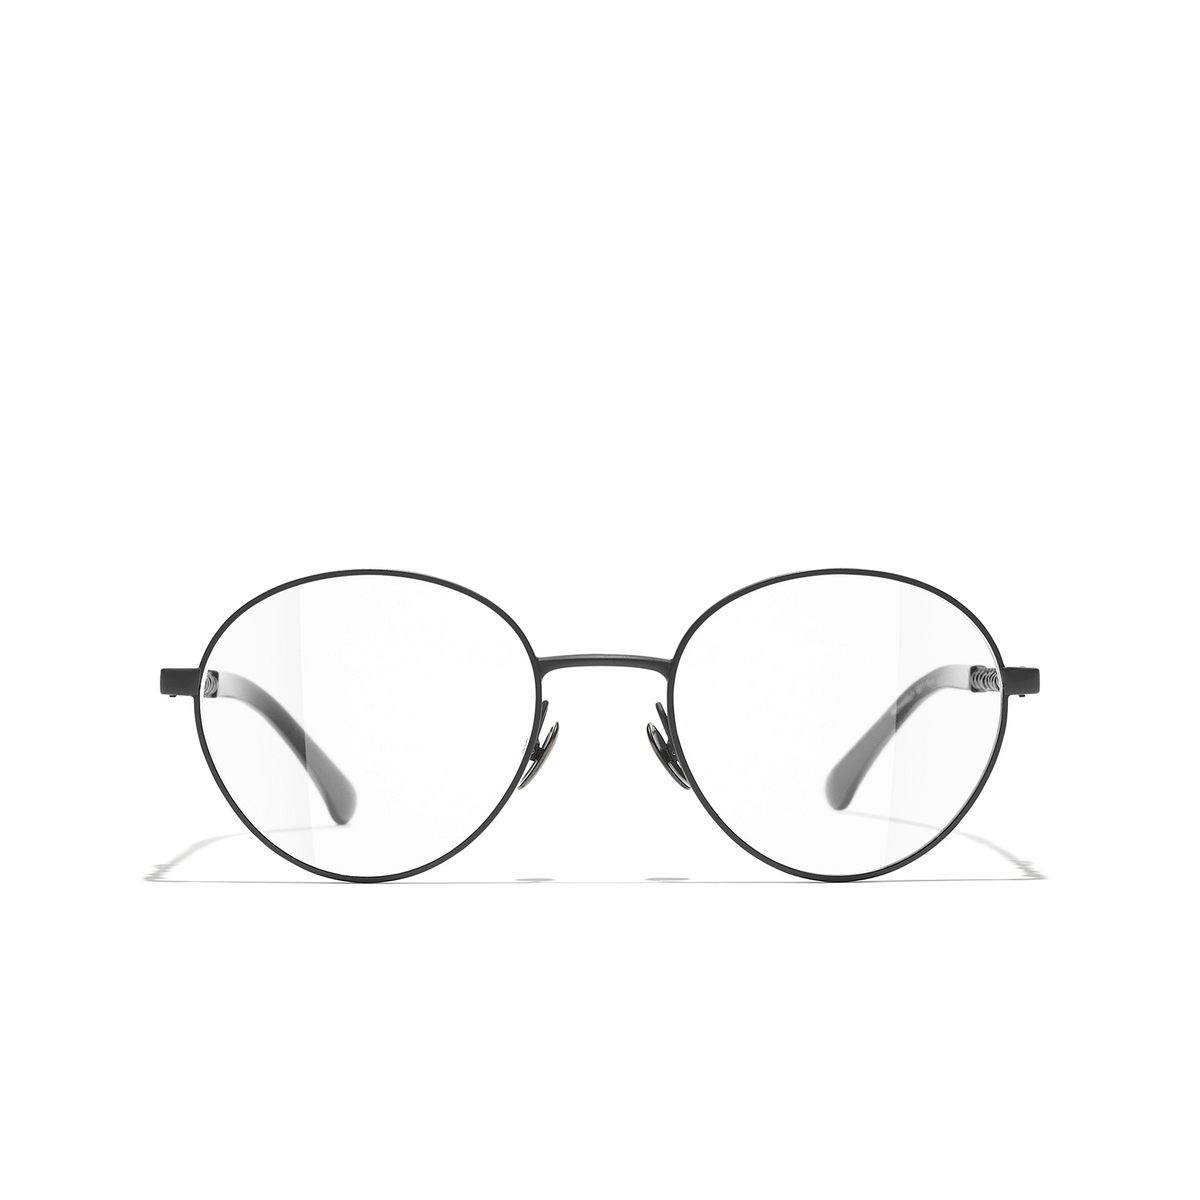 CHANEL round Eyeglasses C101 Black - front view